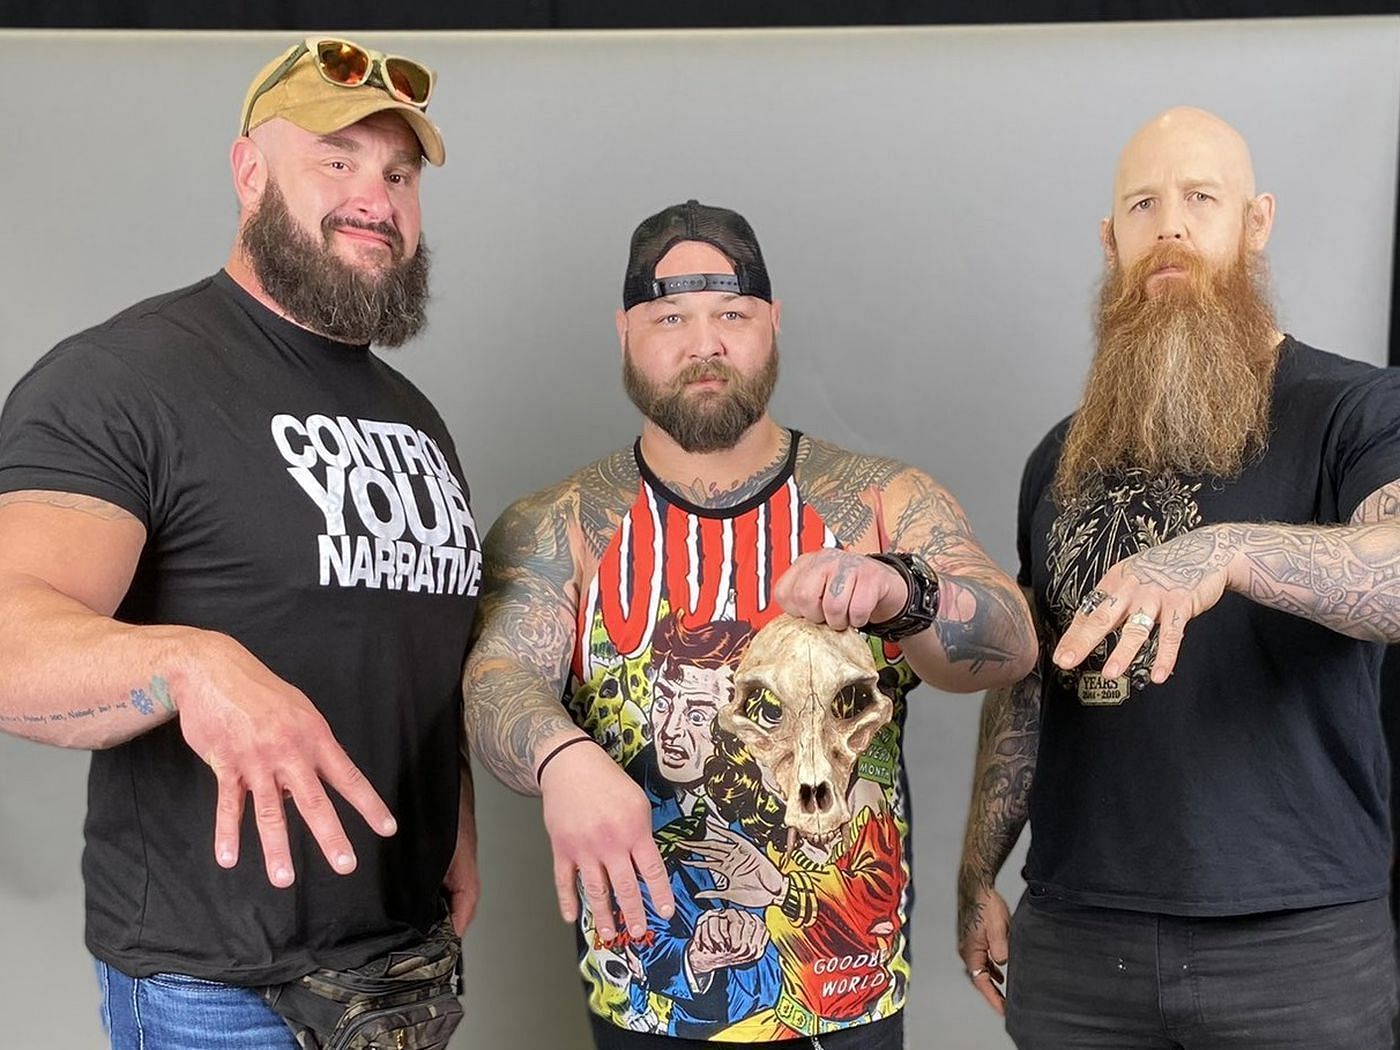 Braun Strowman, Erick Rowan, and Bray Wyatt together once again.